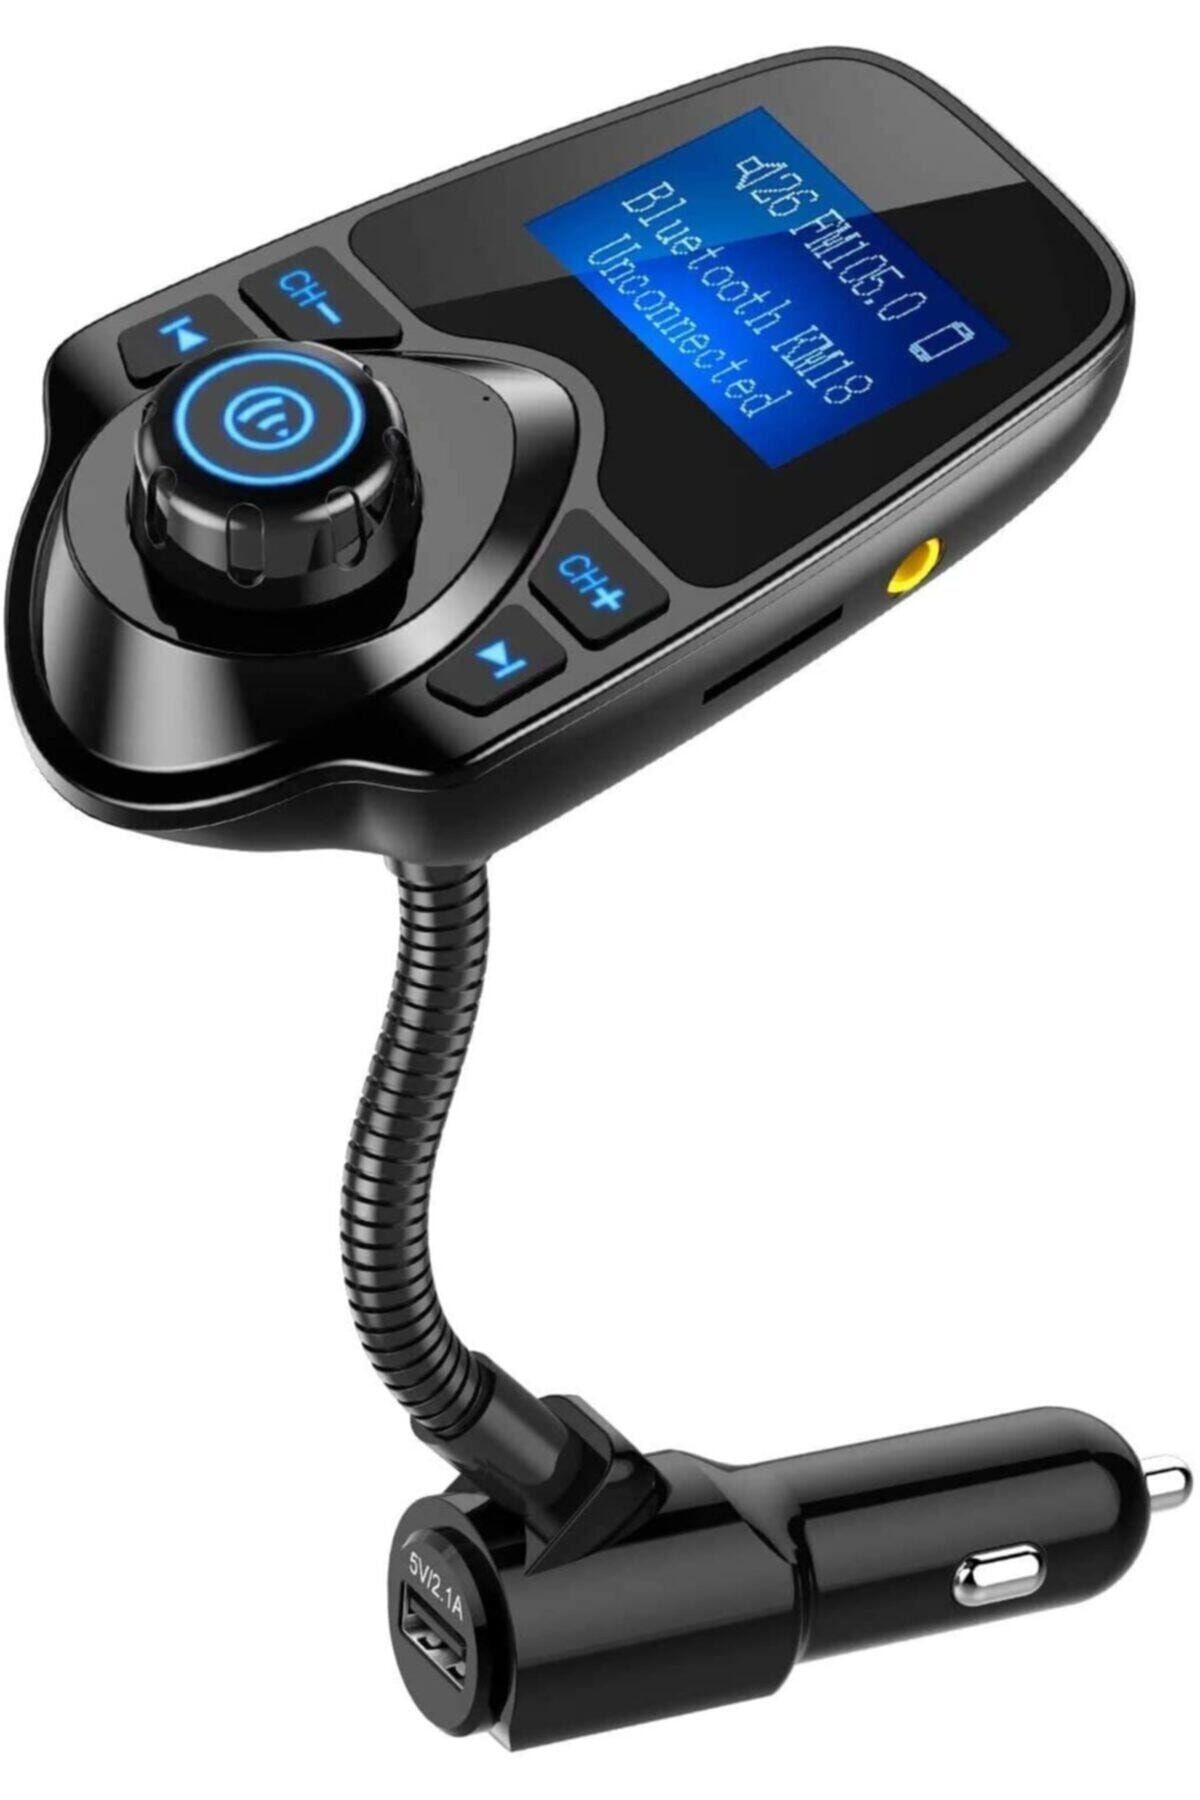 TECHNOZ Kablosuz Araç Içi Bluetooth Fm Transmitter Radyo Araç Kiti 1,44 Inç Ekran Tf/sd Kart Ses Oynatıcı